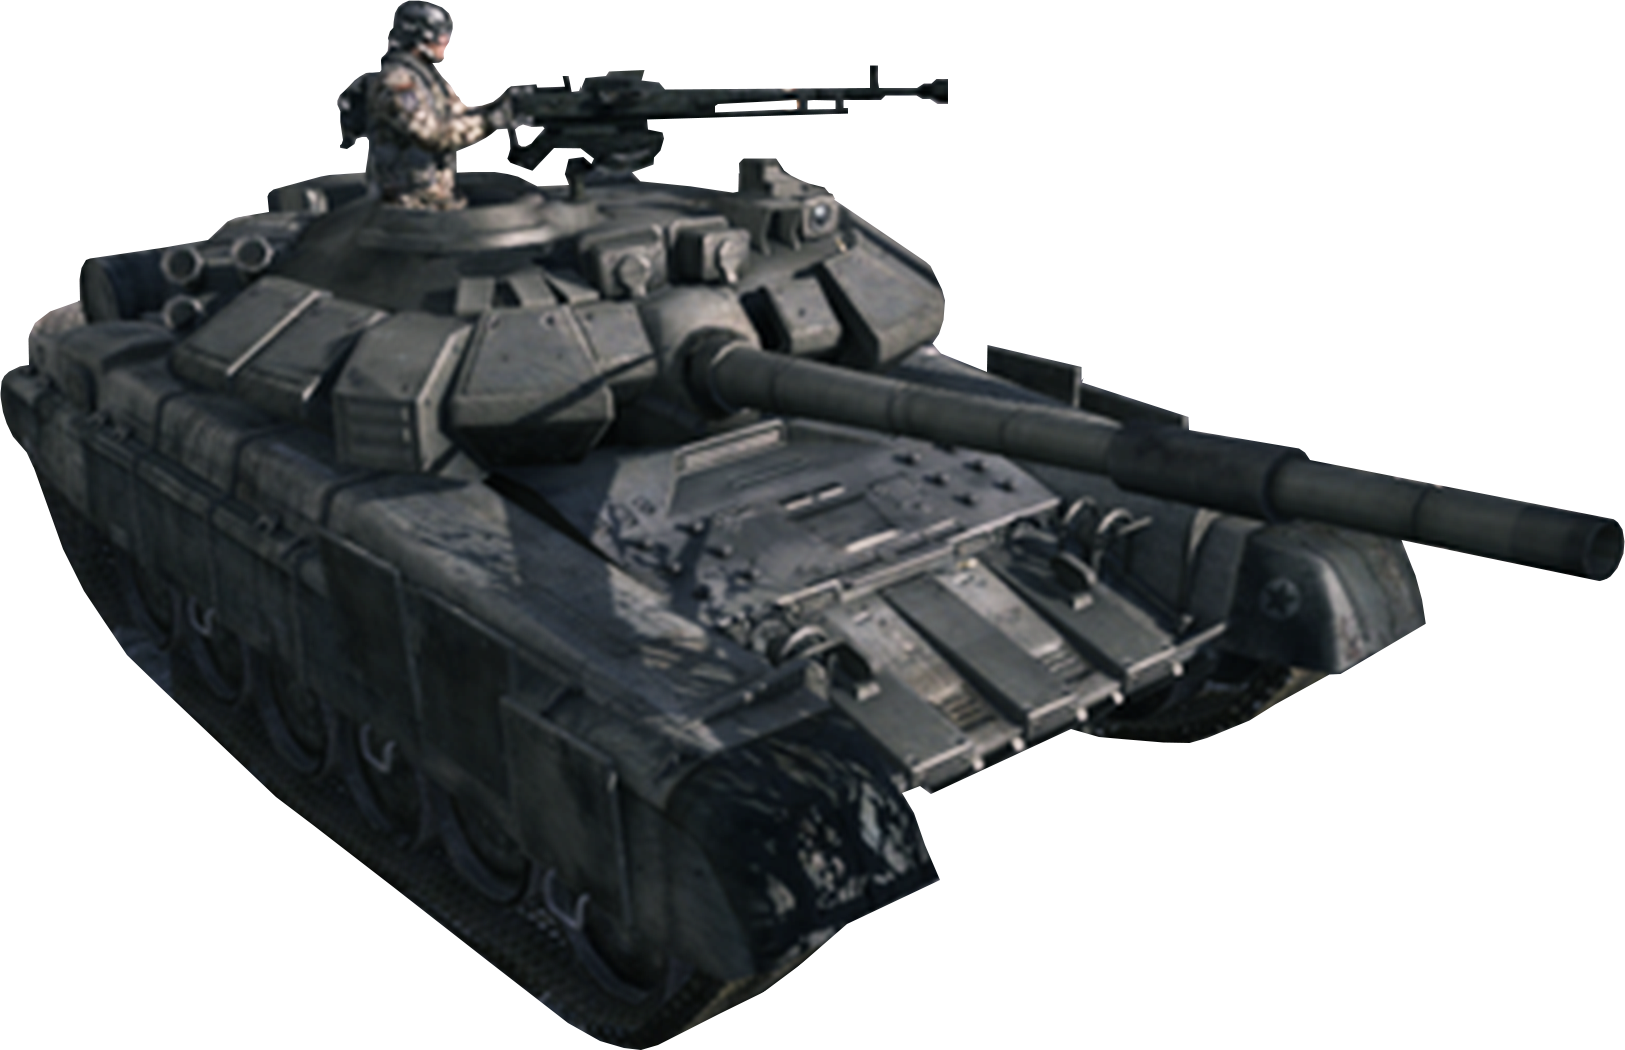 download the last version for windows 90 Tank Battle